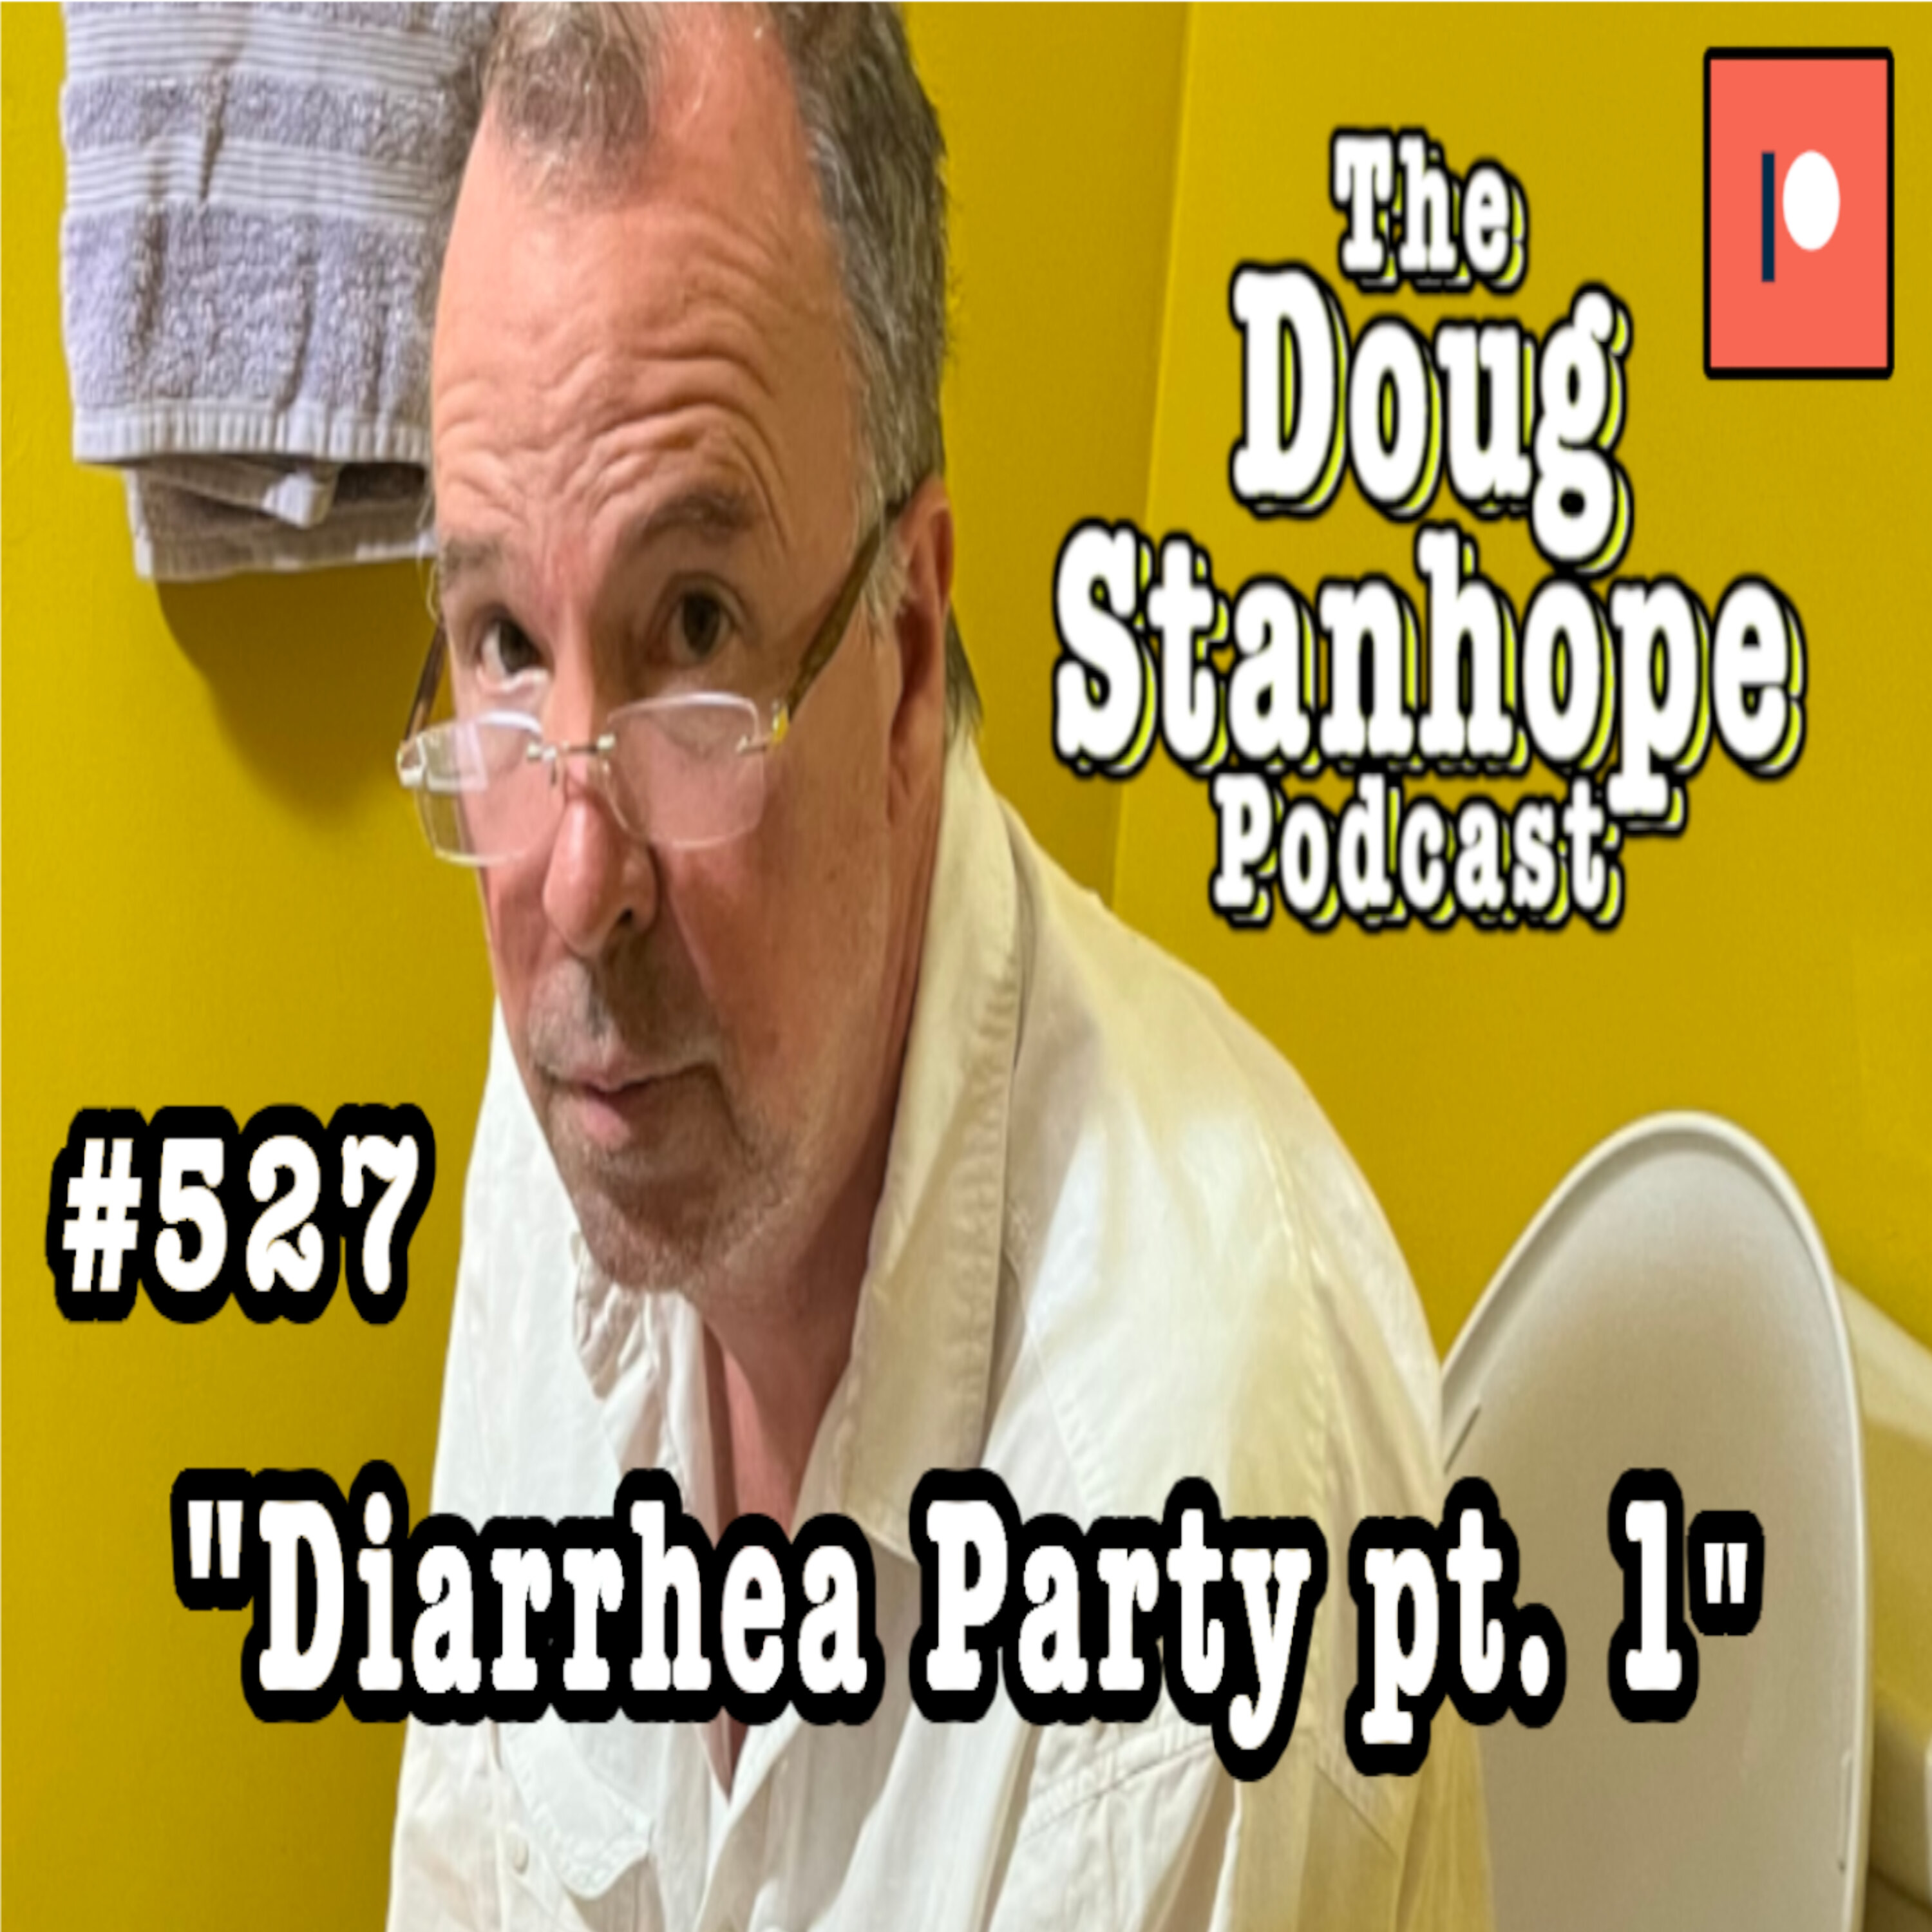 Doug Stanhope Podcast #527 - ”Diarrhea Party pt. 1 - Cliffhanger”